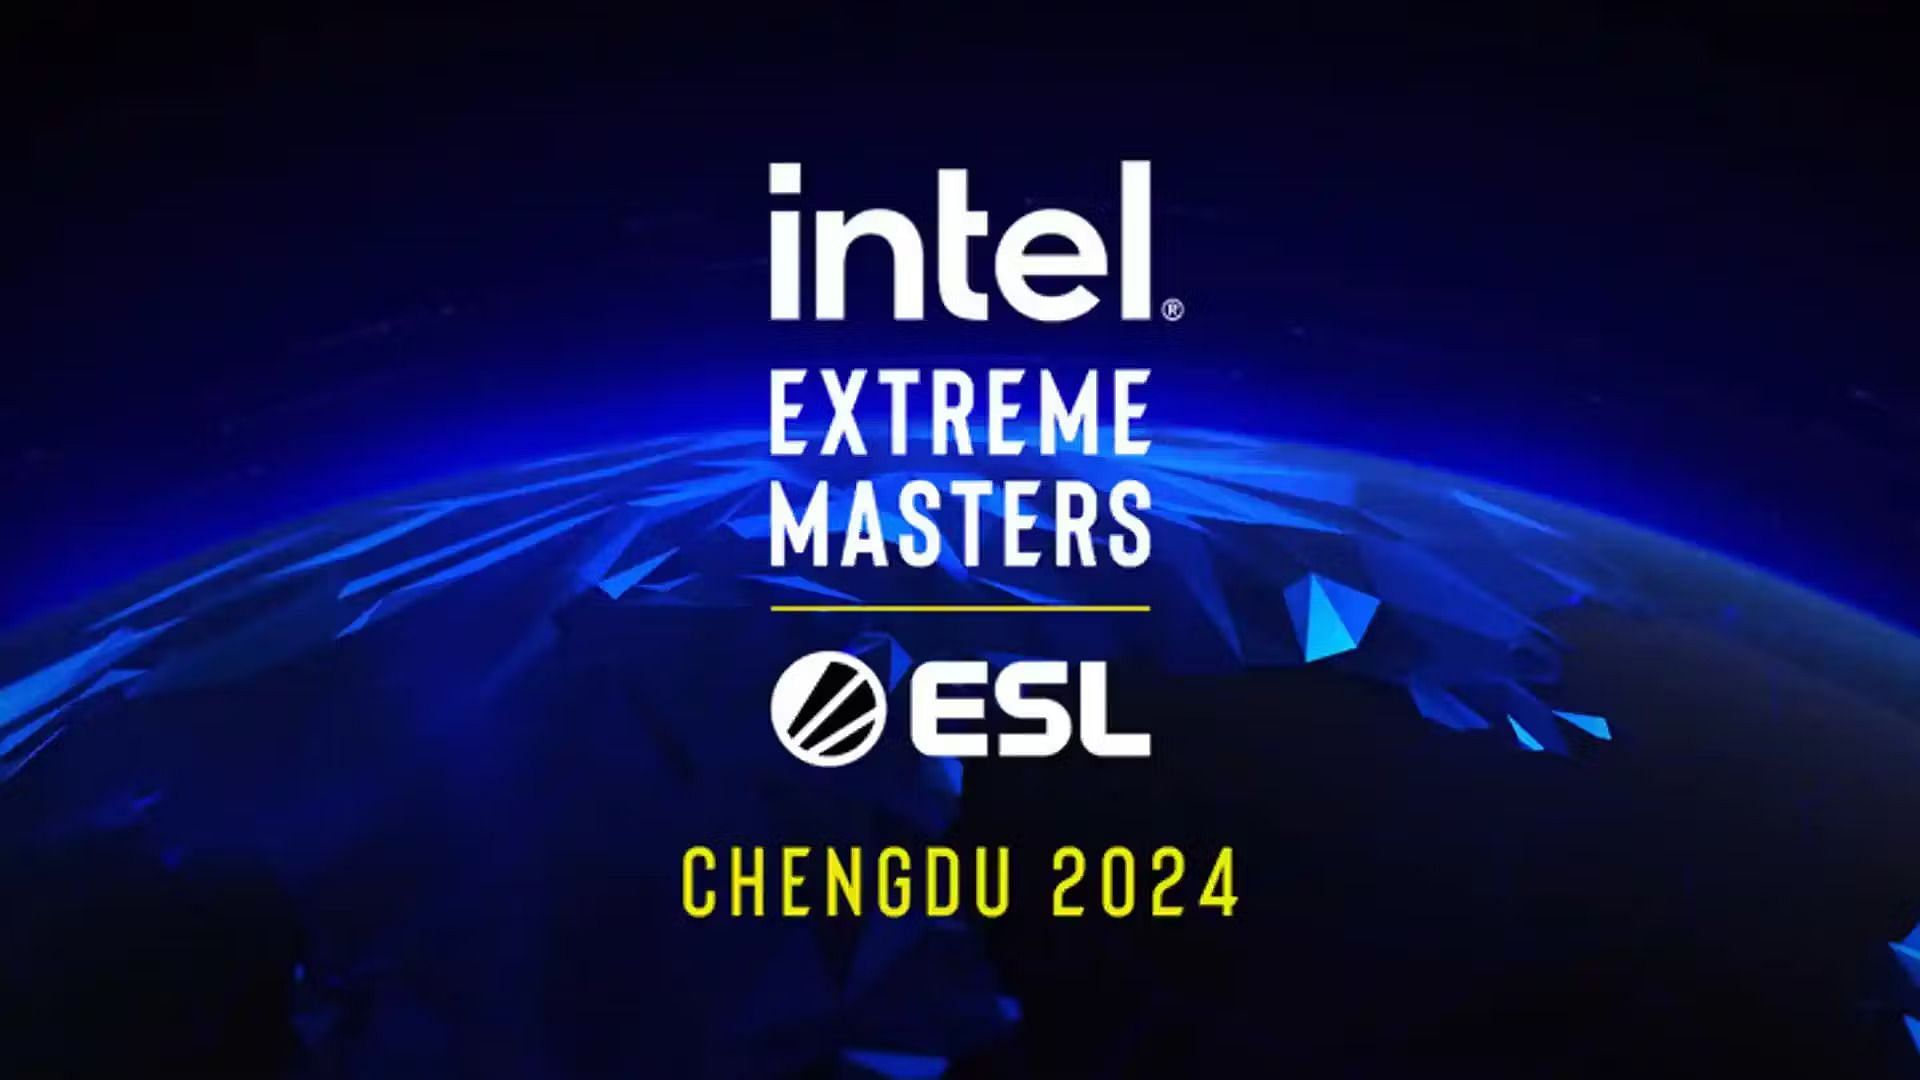 IEM Chengdu 2024, starting from tomorrow (Image via Intel Extreme Masters)